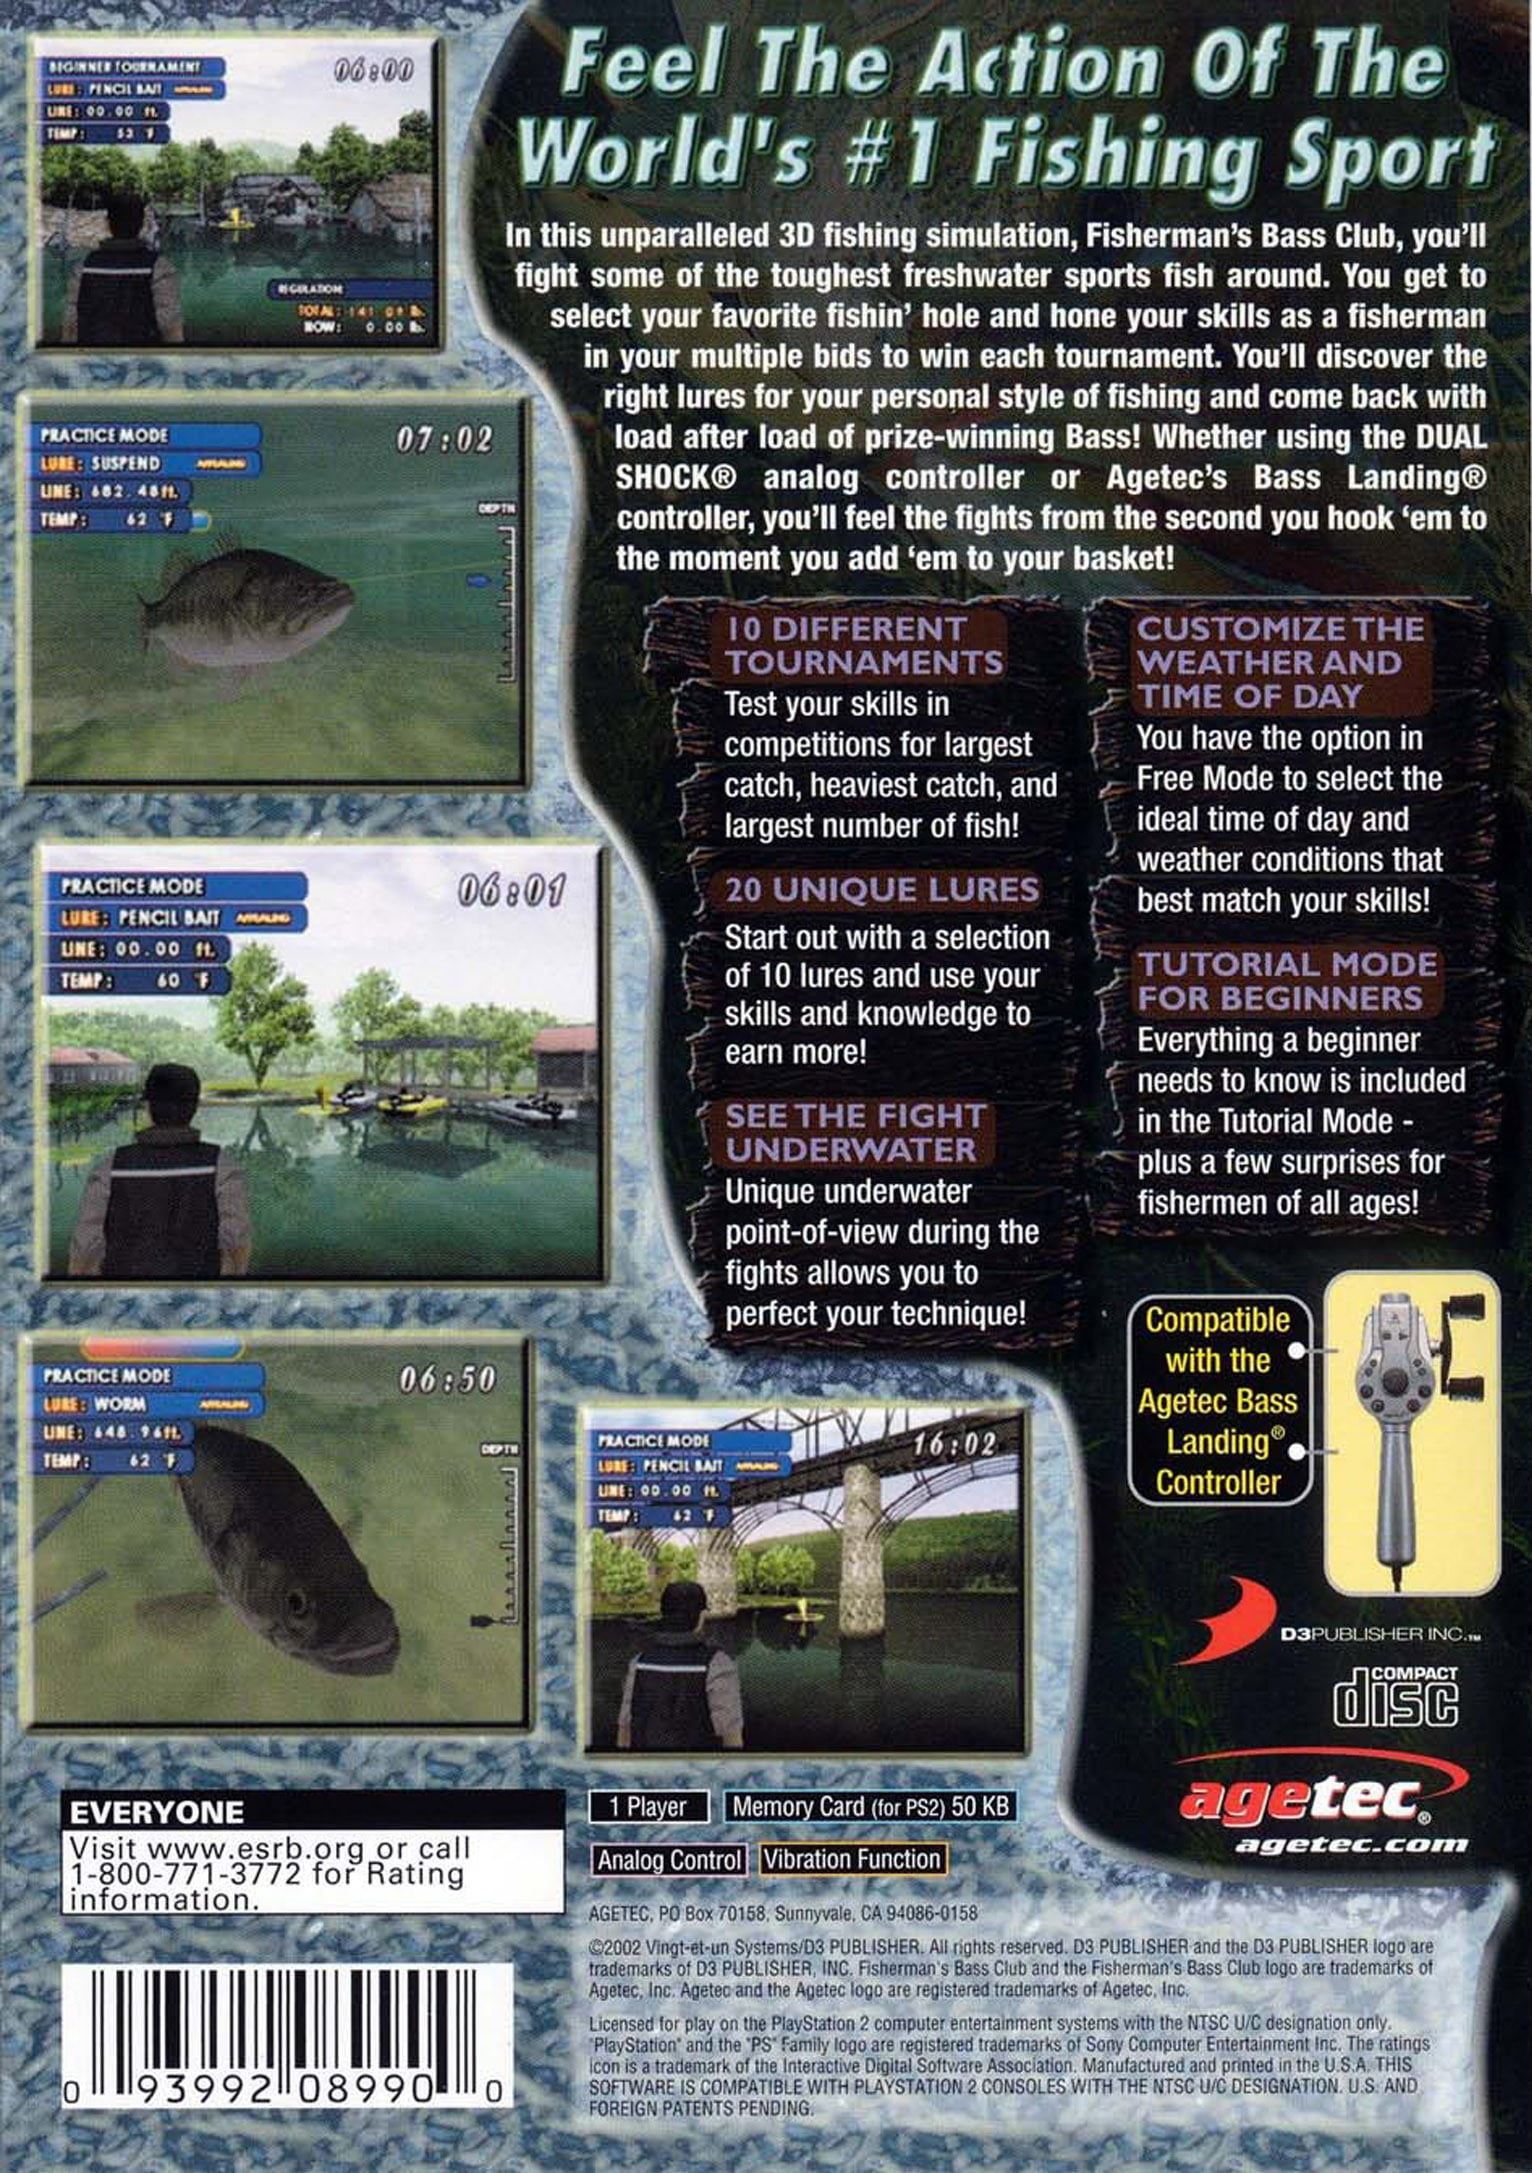 Fisherman's Bass Club - PlayStation 2 